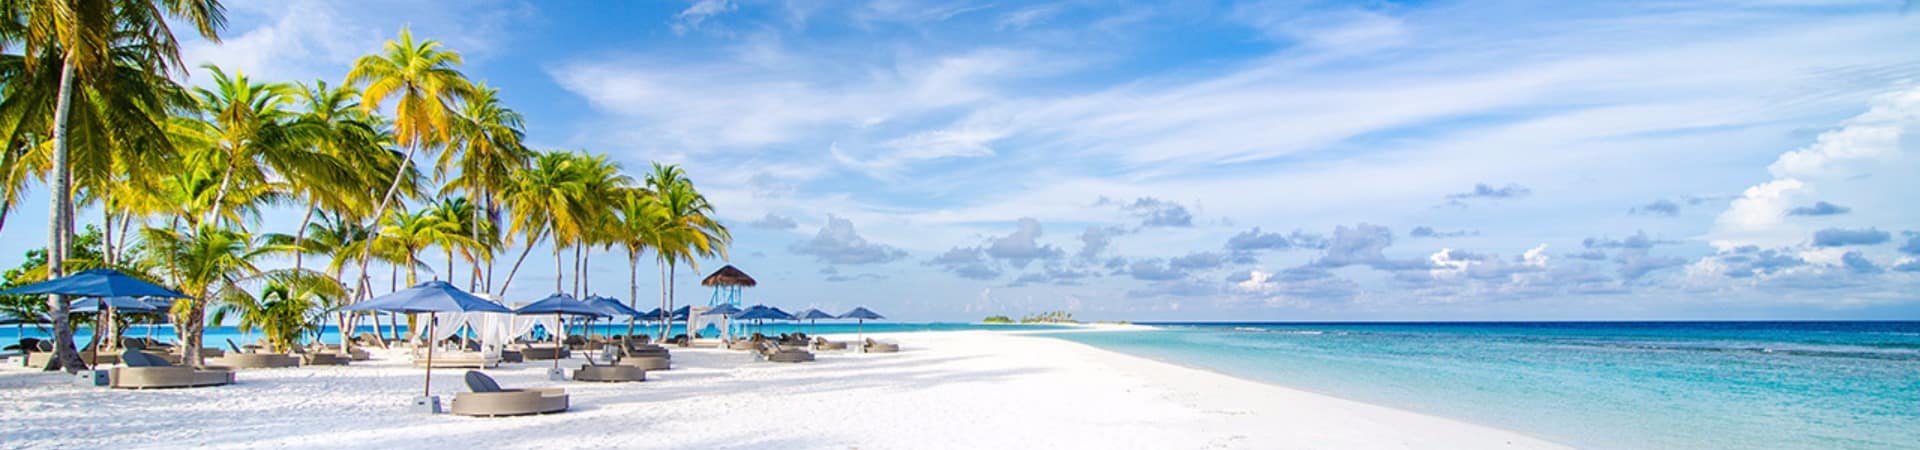 Finolhu maldives praia e banco de areia